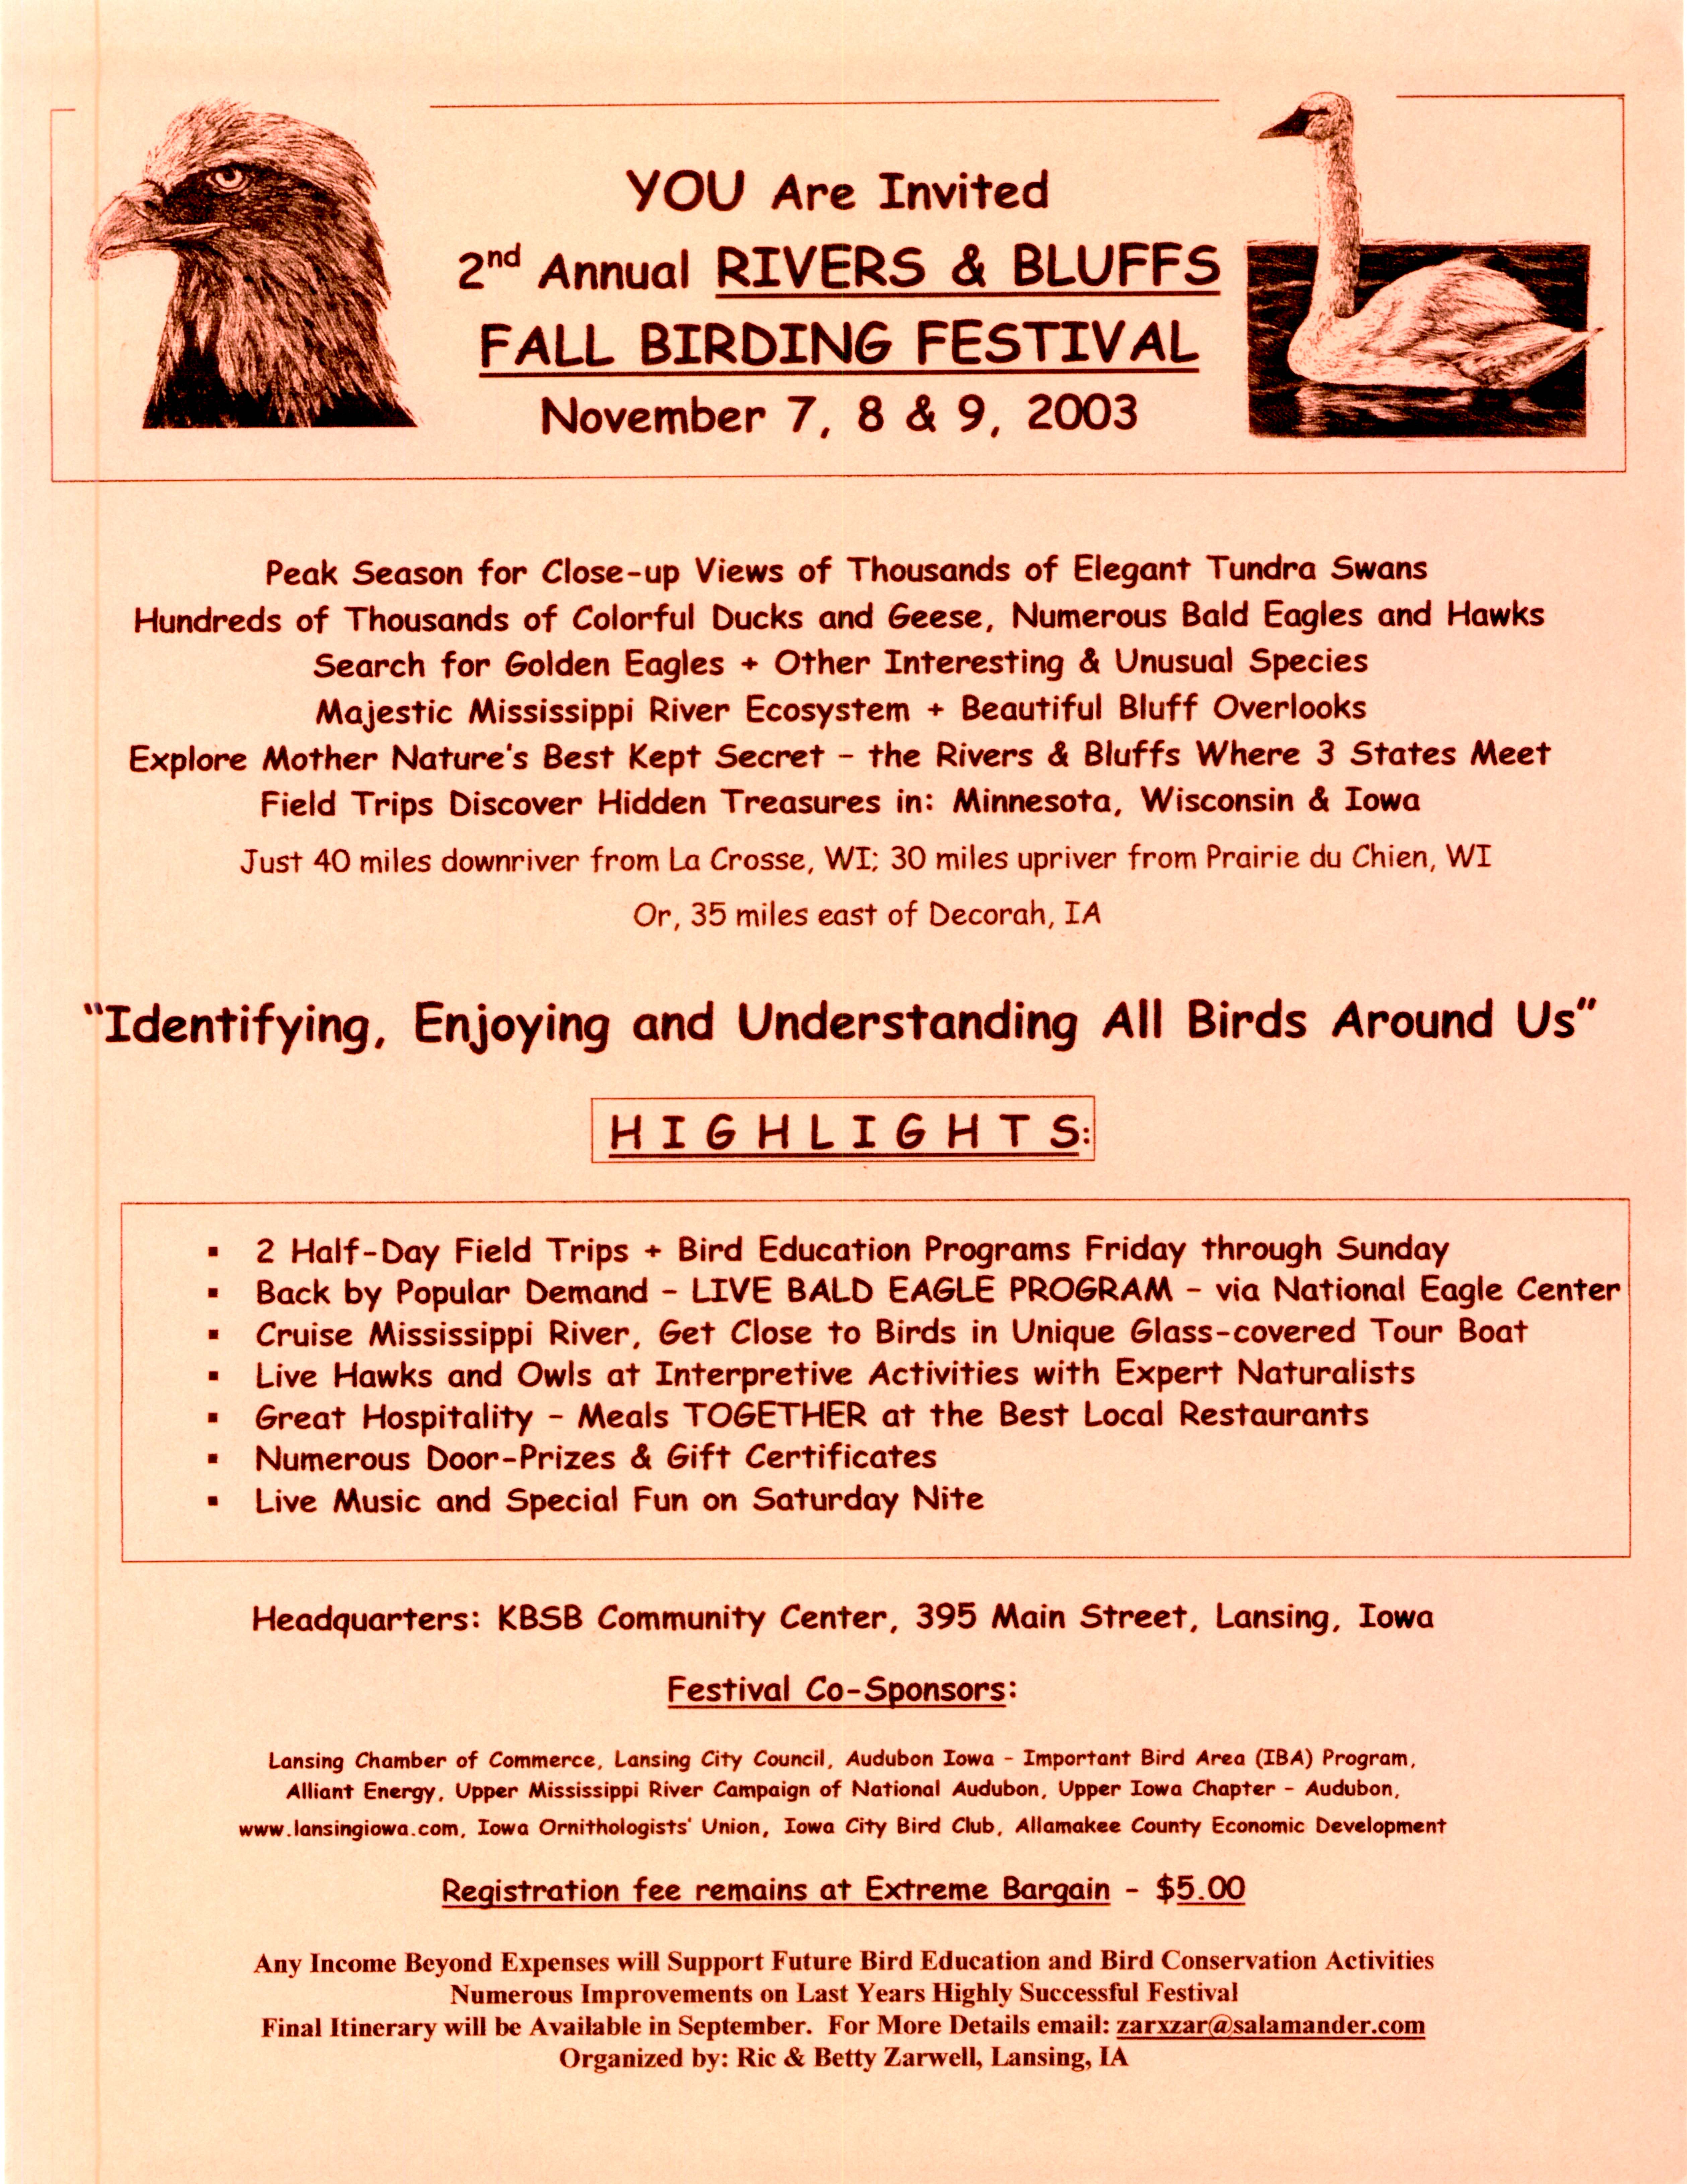 Invitation to Fall Birding Festival in Lansing, Iowa, November 7-9, 2003